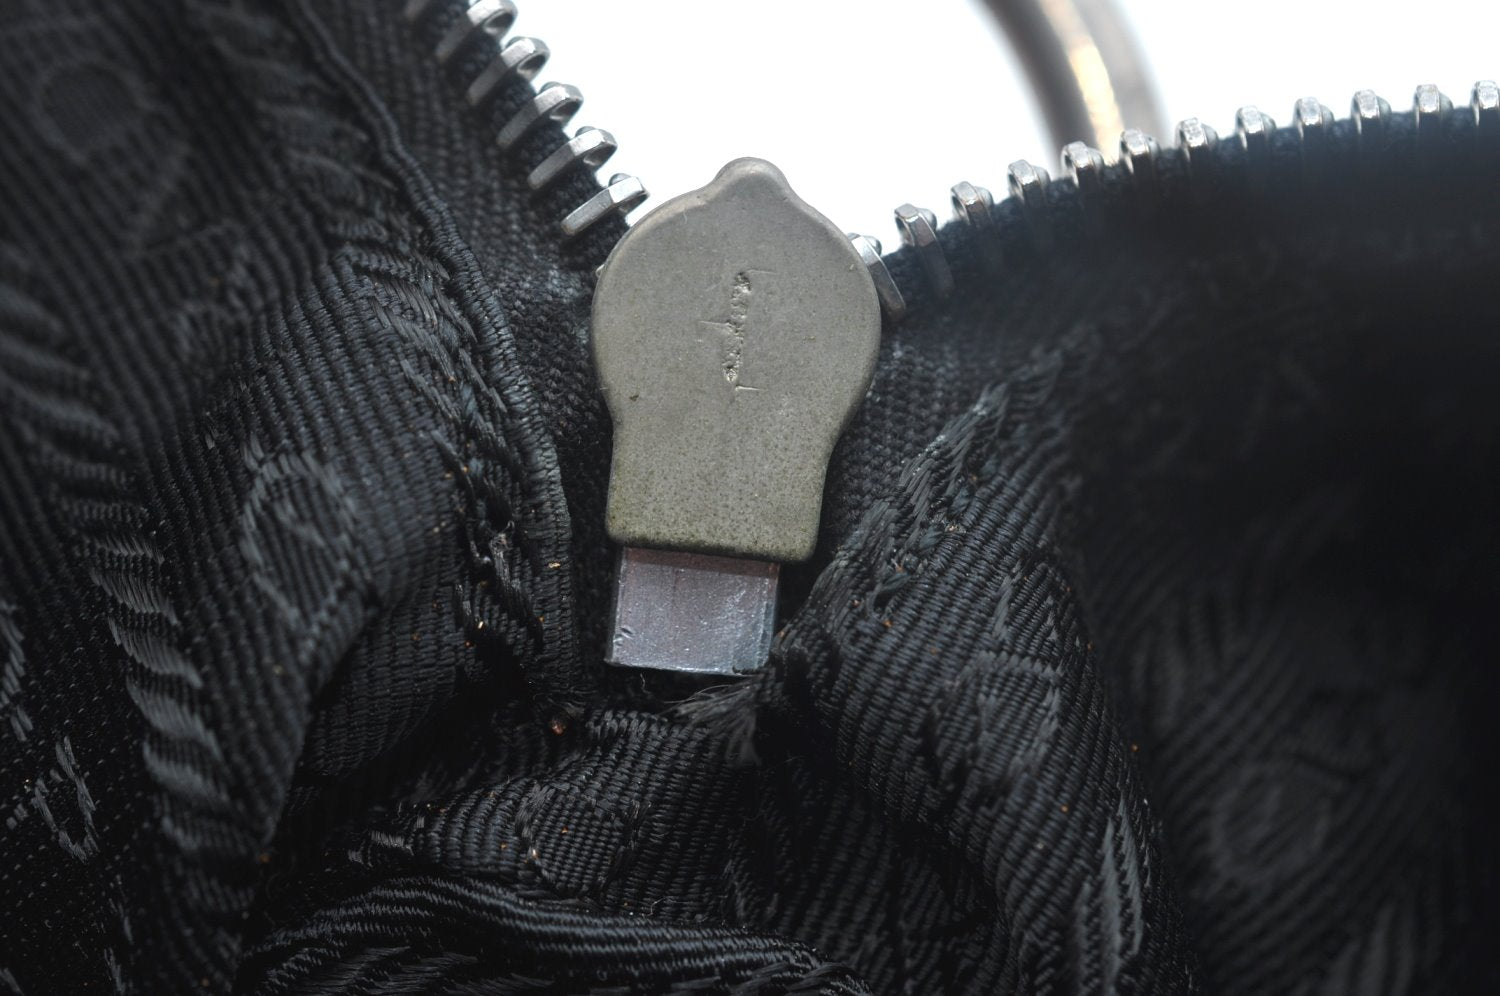 Authentic PRADA Nylon Leather Shoulder Hand Bag Purse Black K9940